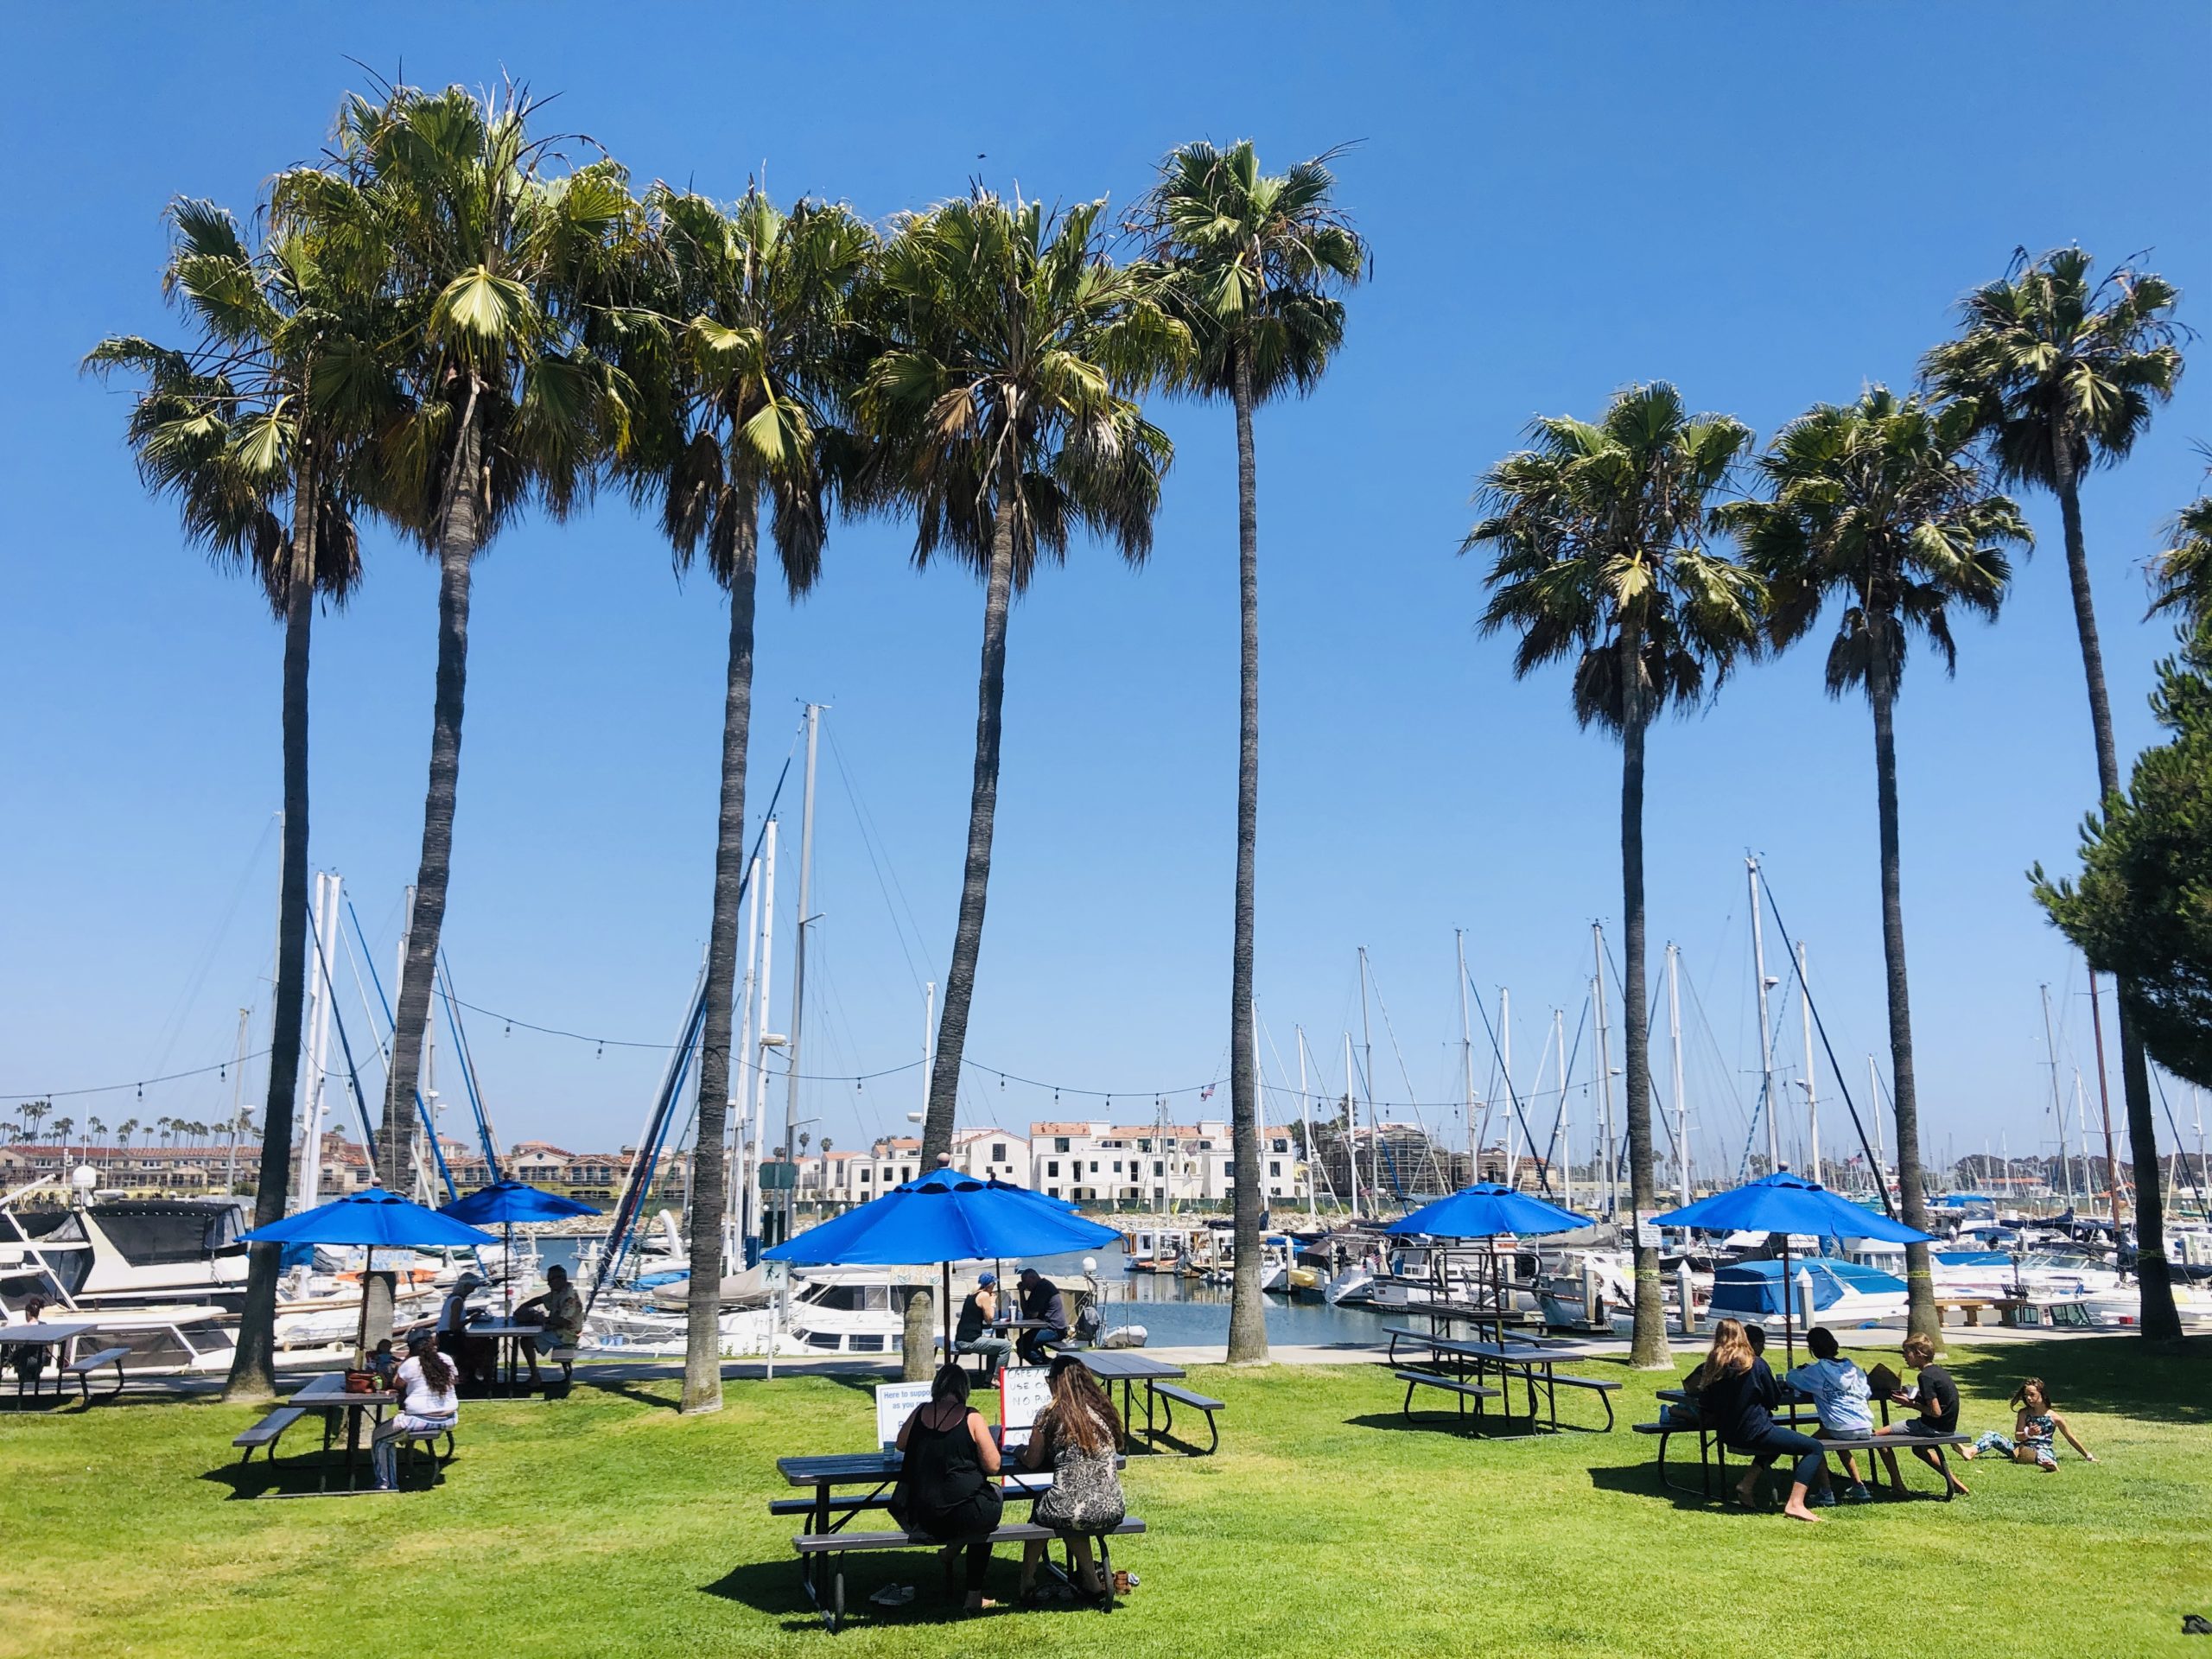 10 Tips to Safely Visit Seaside Ventura Harbor Village